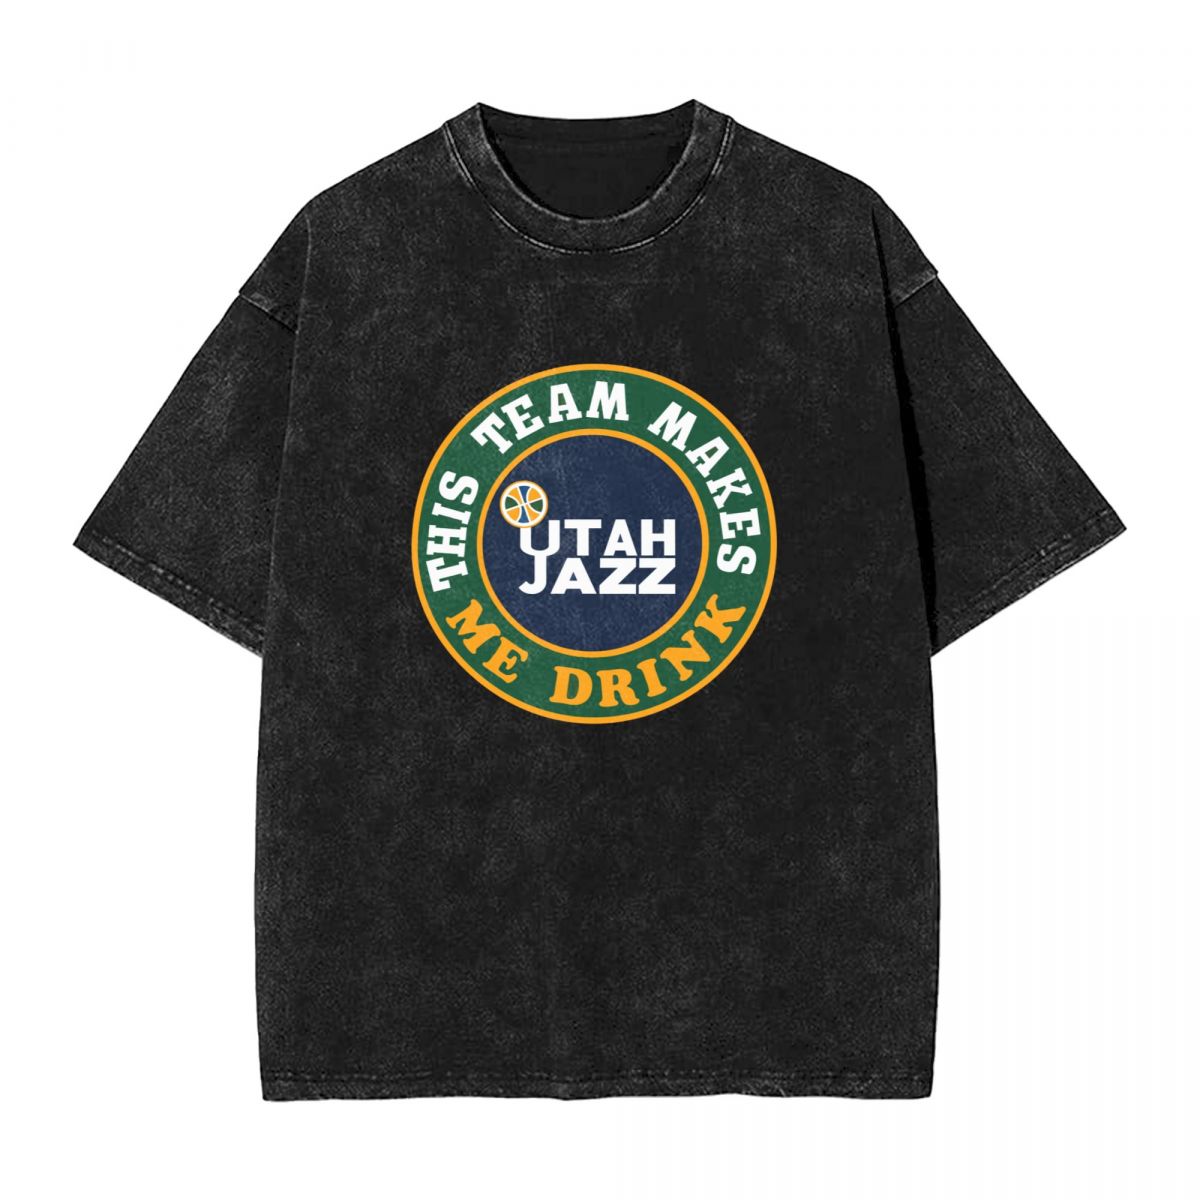 Utah Jazz This Team Makes Me Drink Printed Vintage Men's Oversized T-Shirt